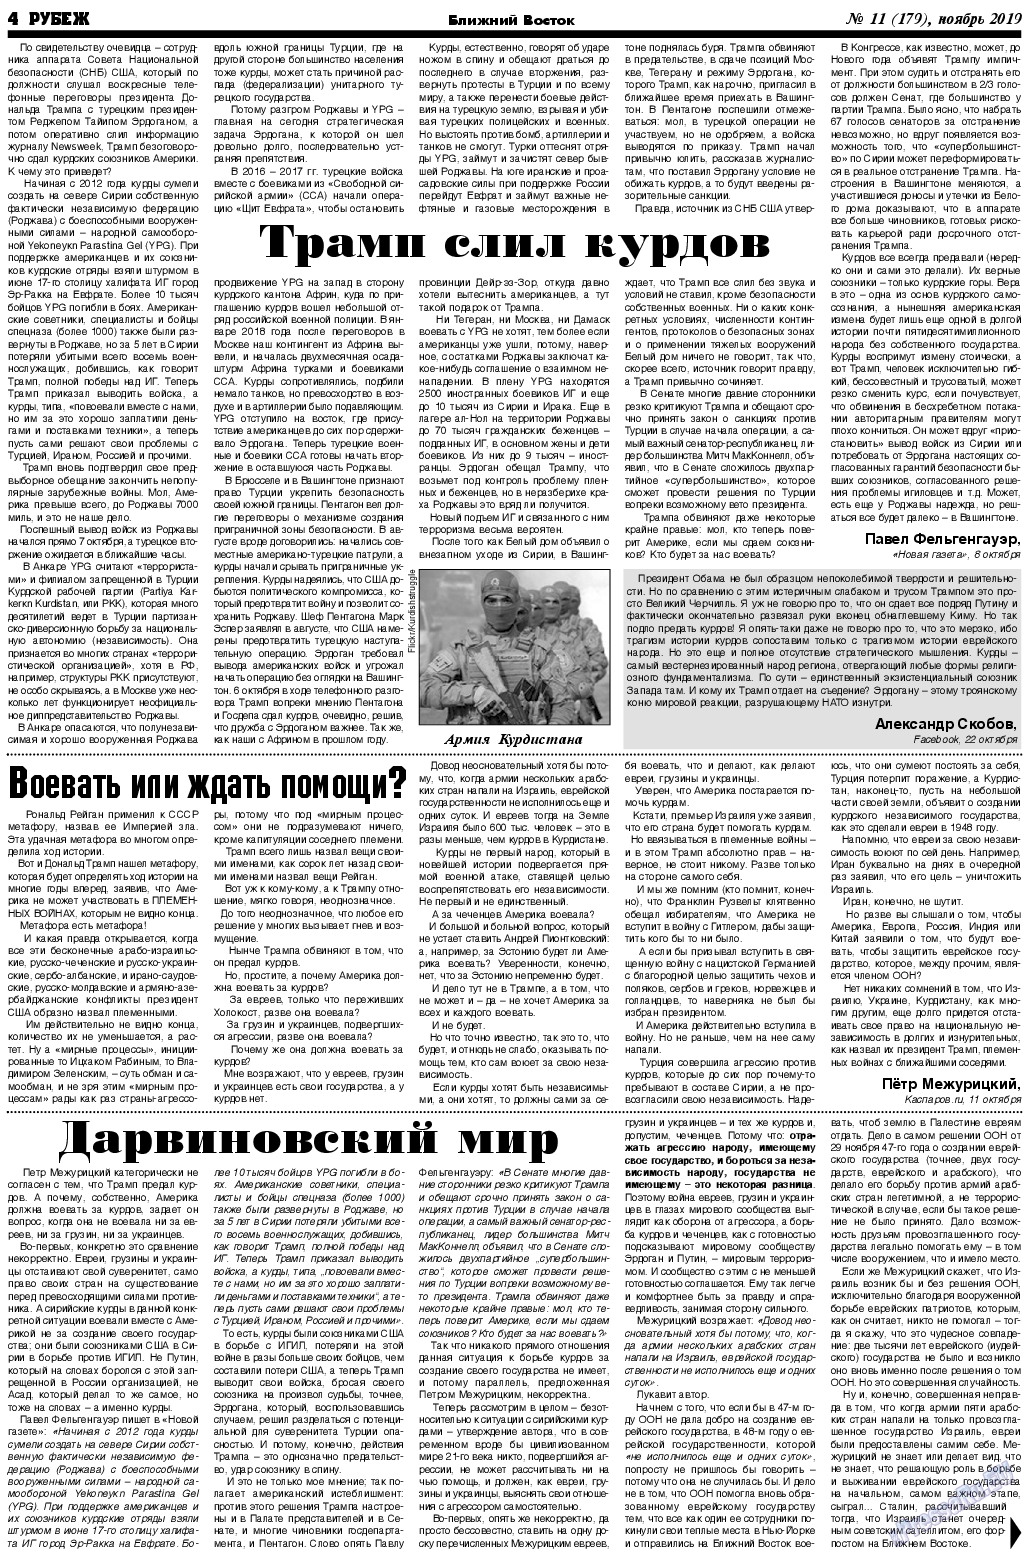 Рубеж, газета. 2019 №11 стр.4